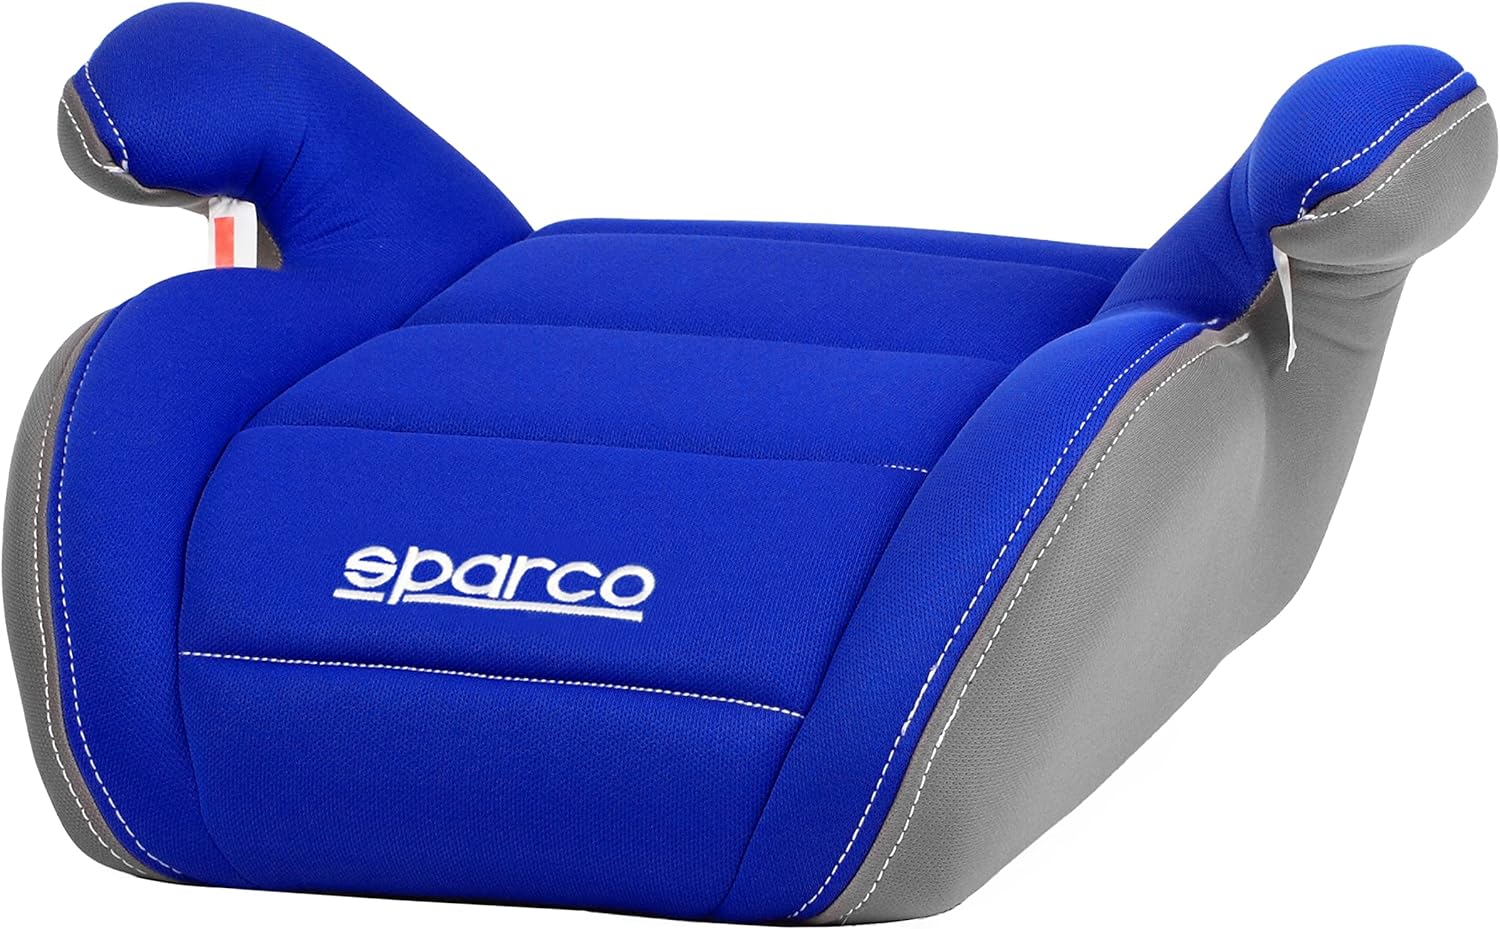 Sparco Booster i-Size 125-150 cm Child car seat 22-36kg Blue F100KI_BL